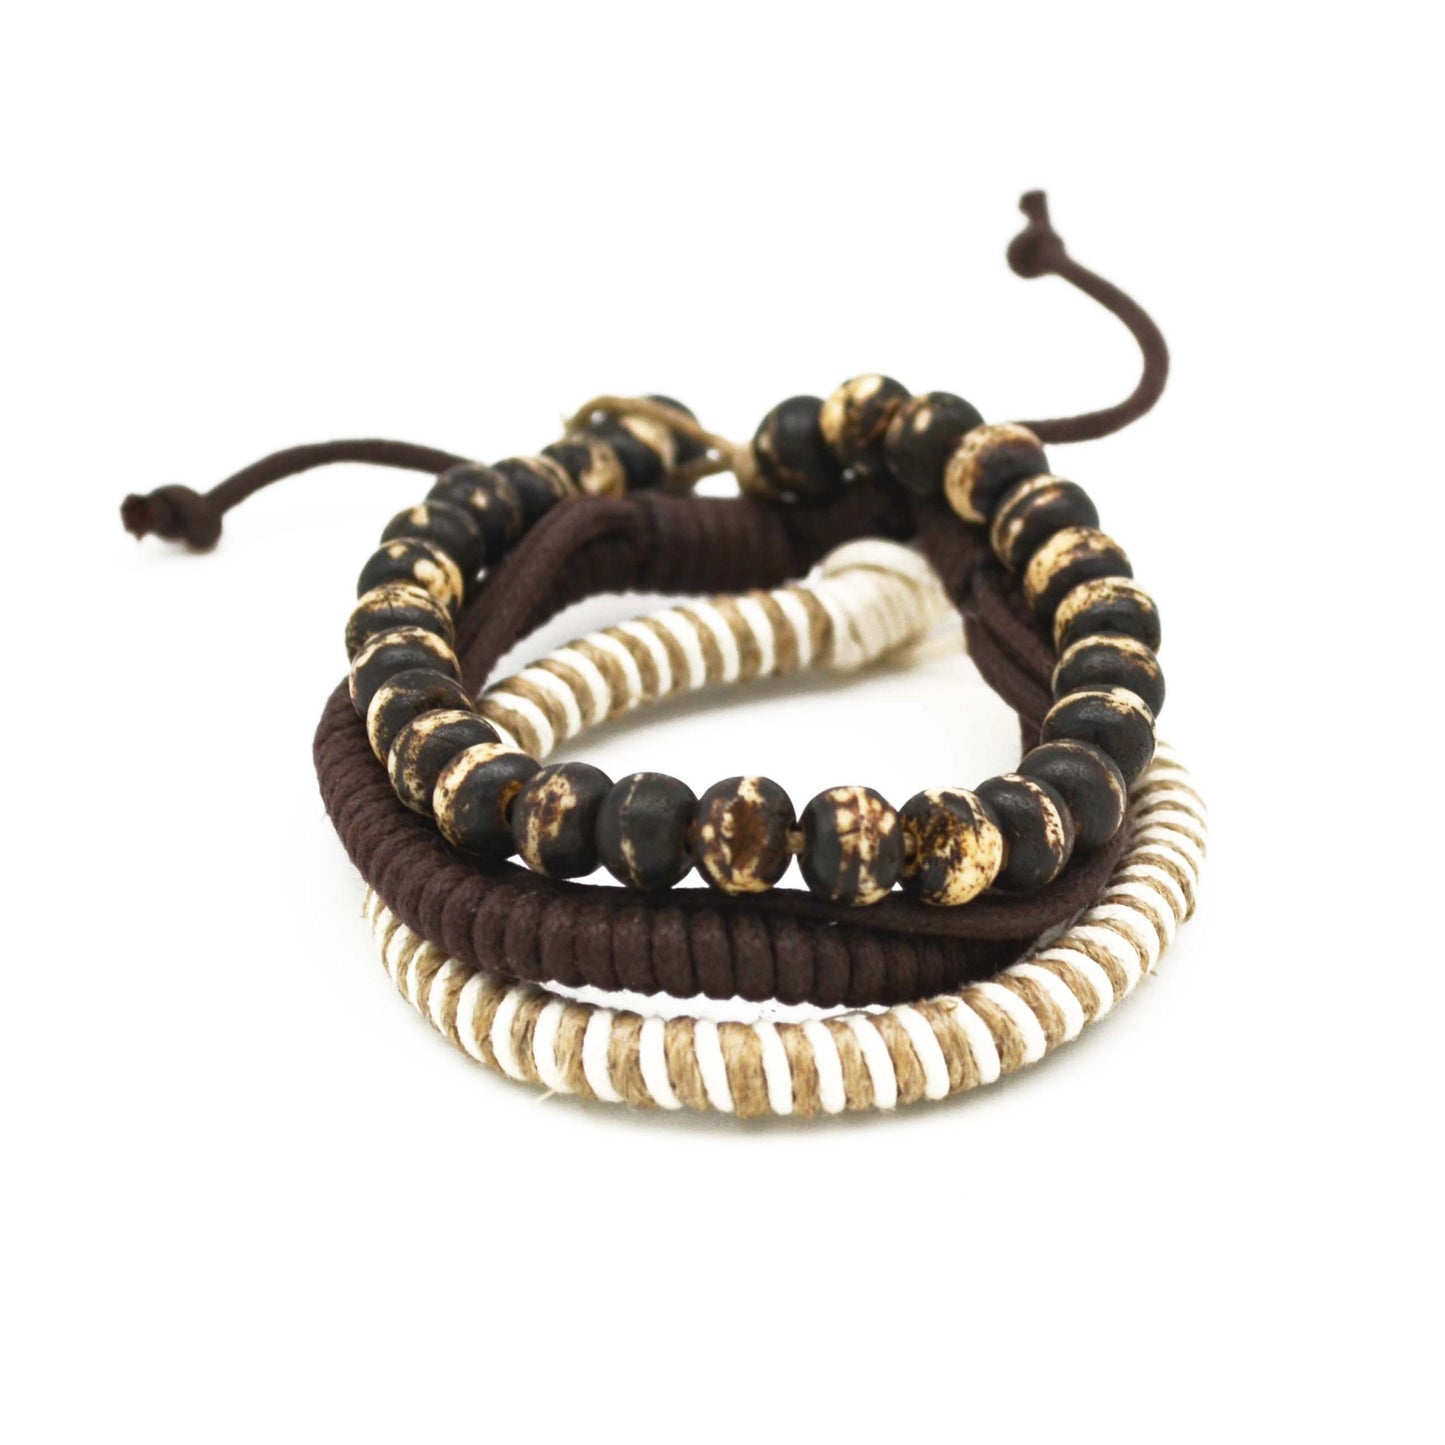 Brown, White and Black Braided Bracelet